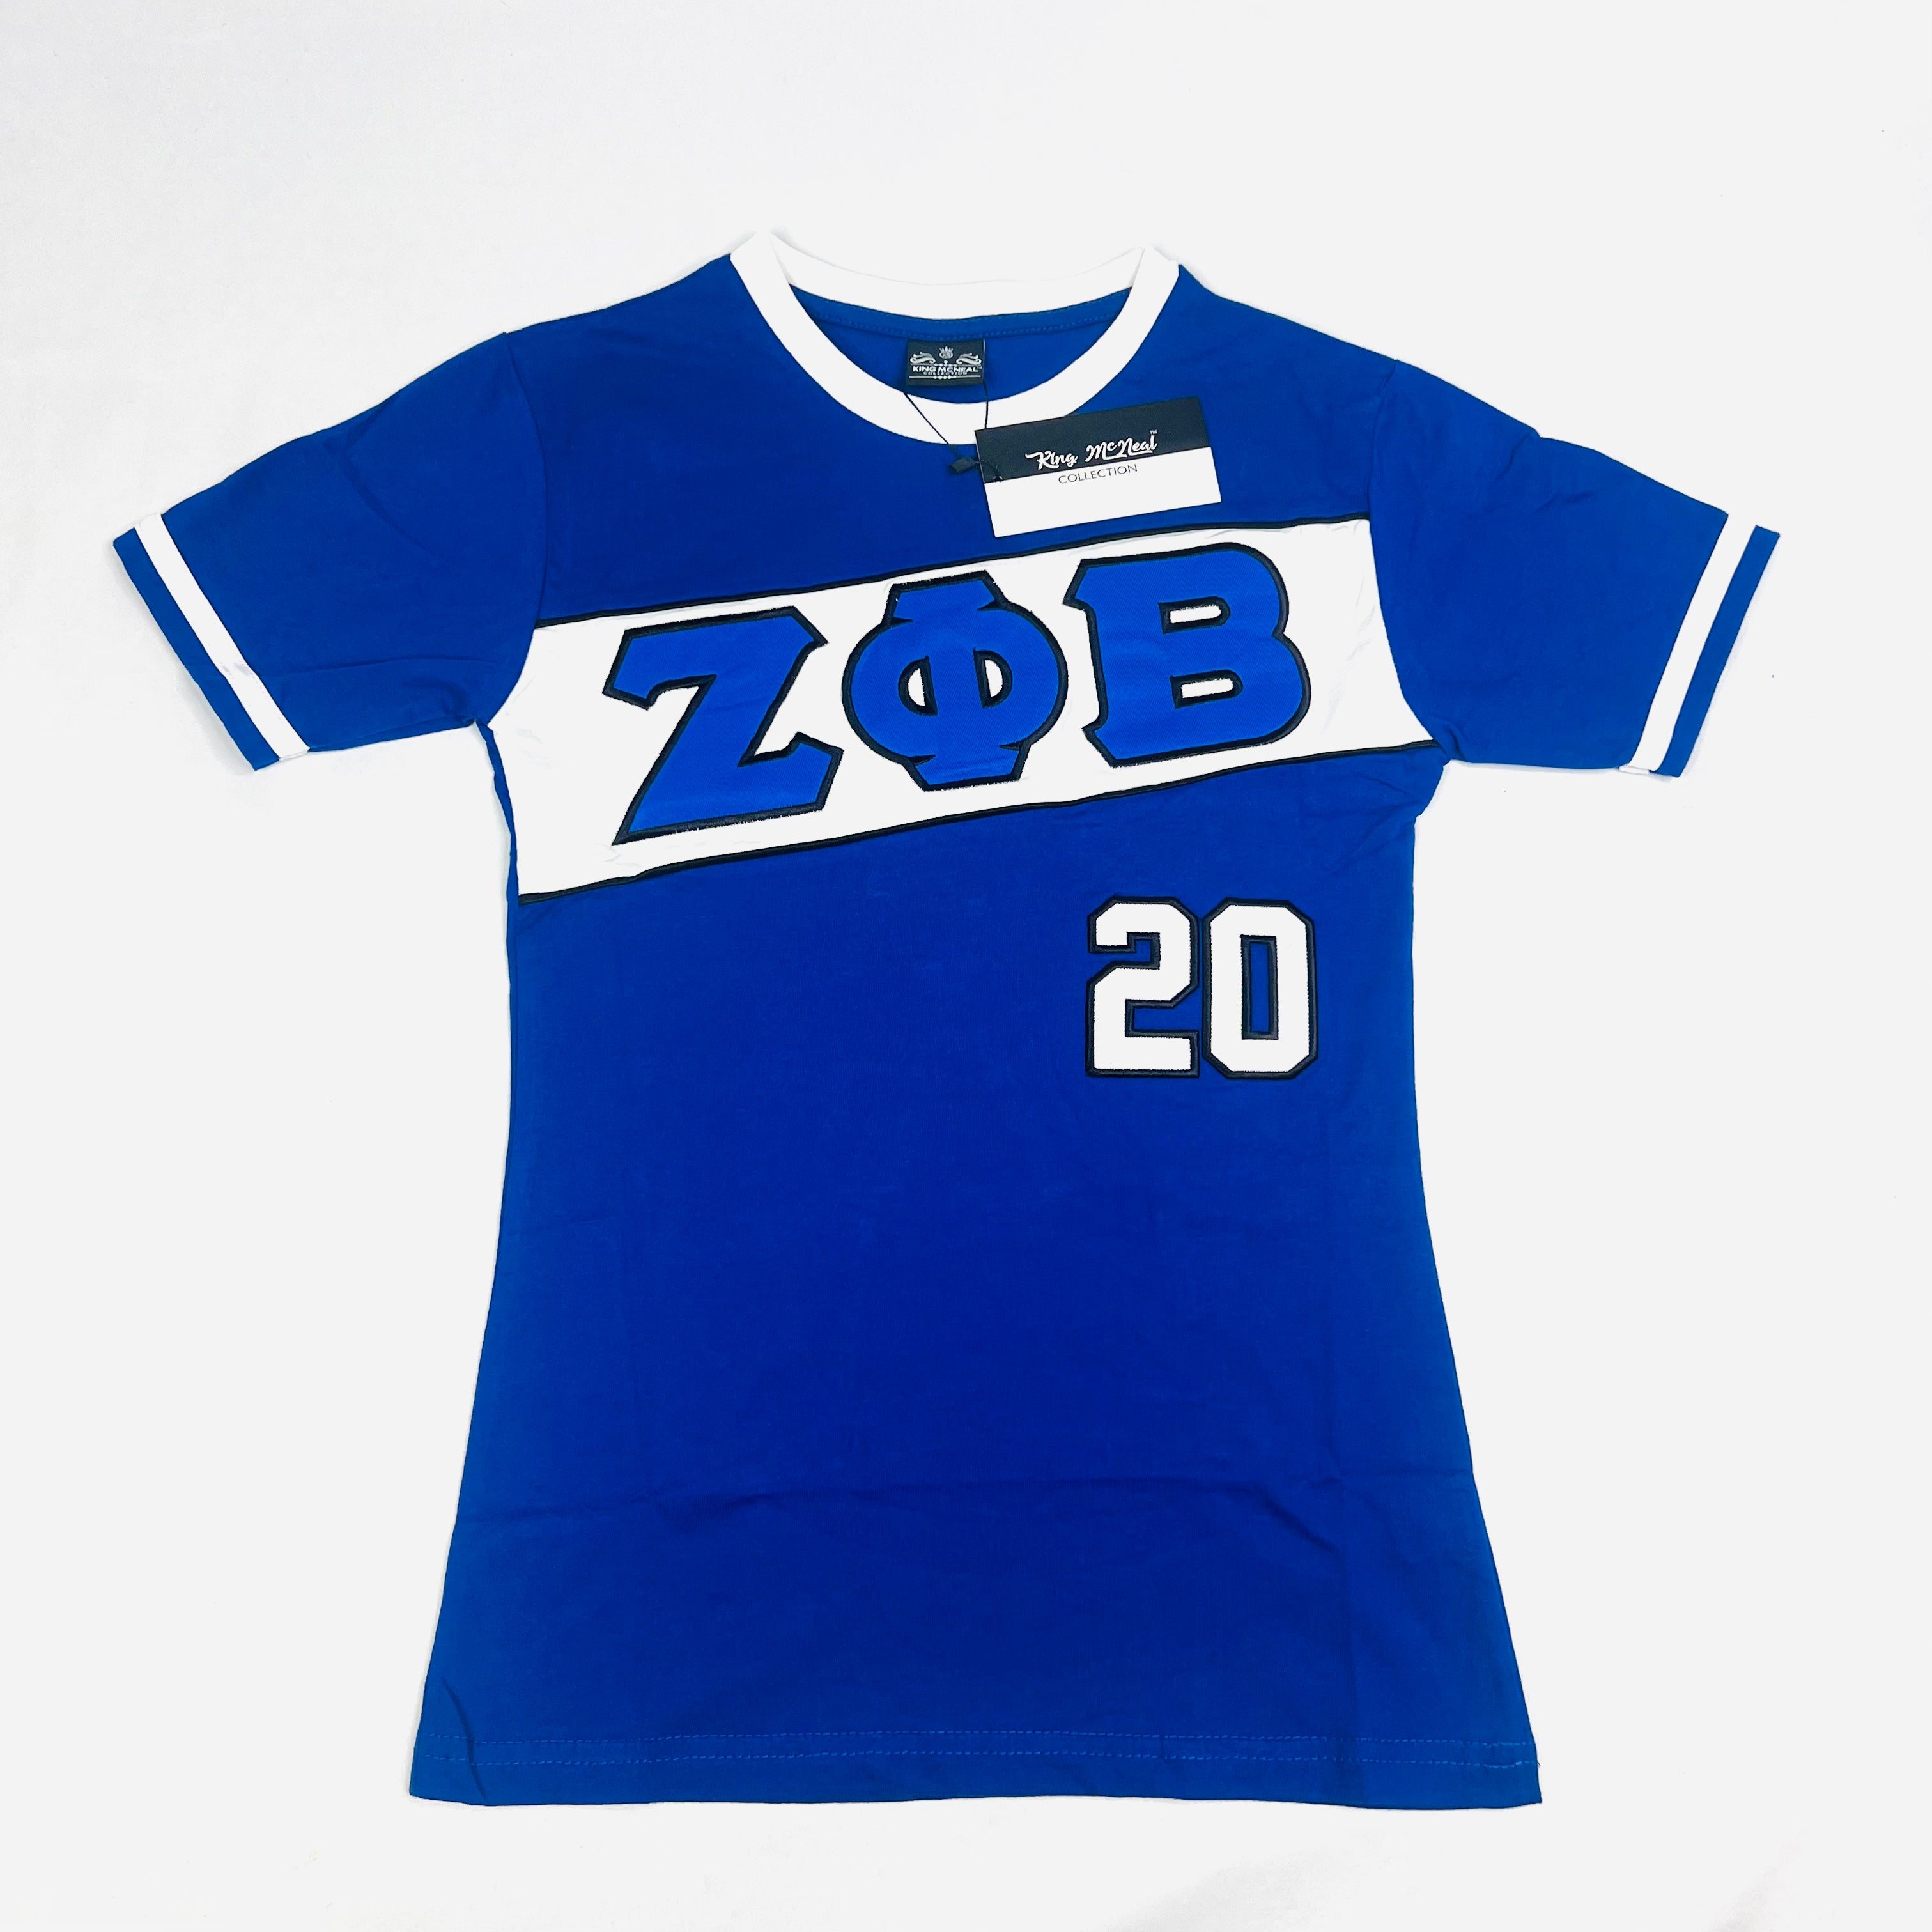 Zeta Jersey Premium Shirt